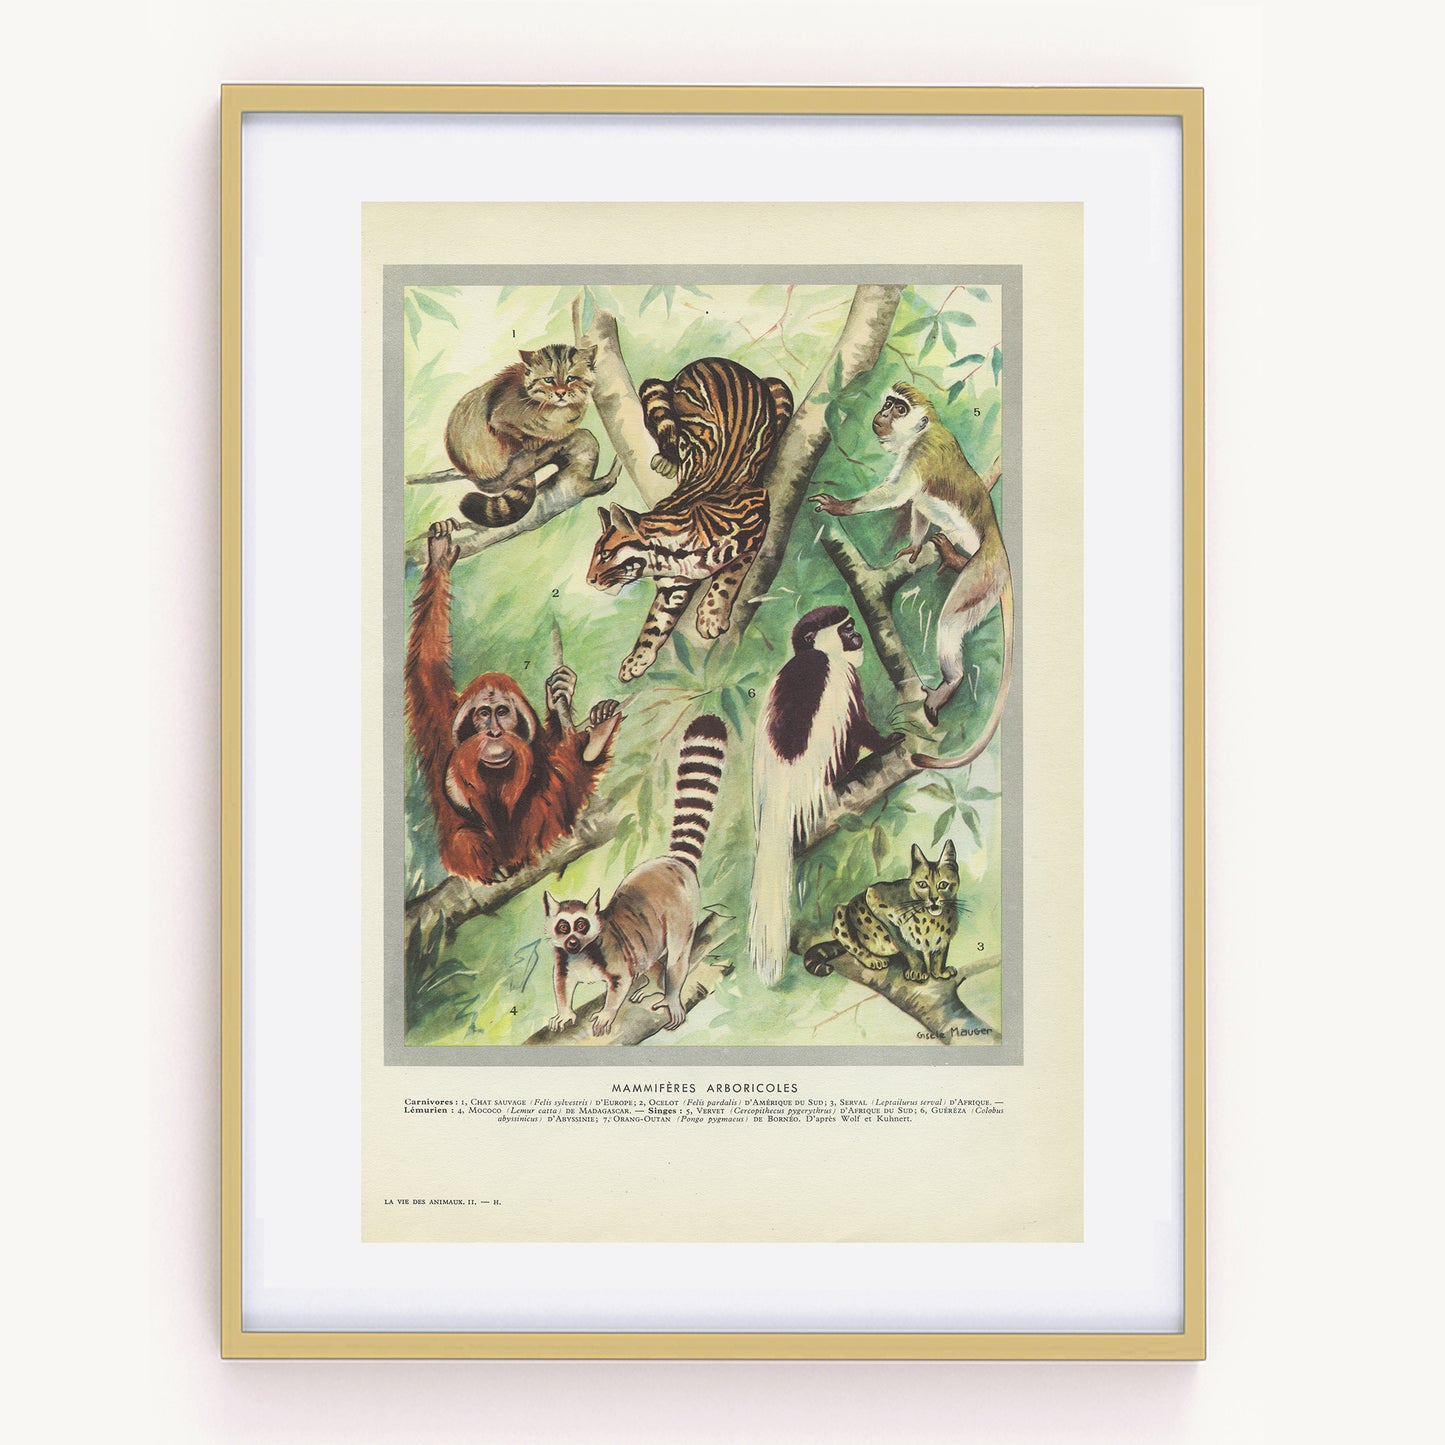 1949 Arboricole mammals print - Lemur, wildcat, monkey